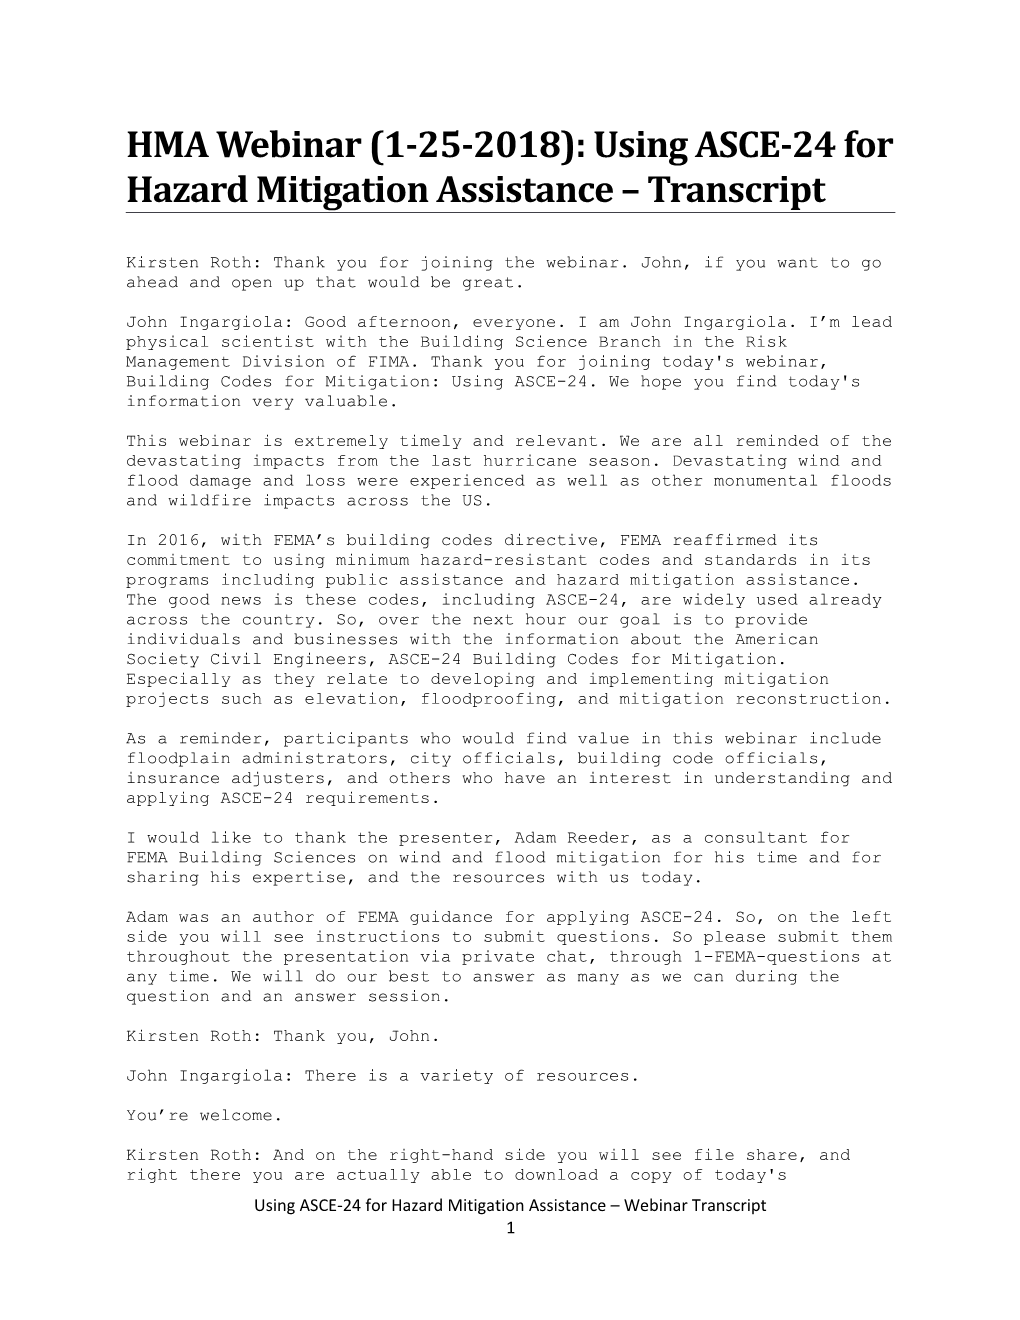 HMA Webinar (1-25-2018): Using ASCE 24 for Hazard Mitigation Assistance - Transcript